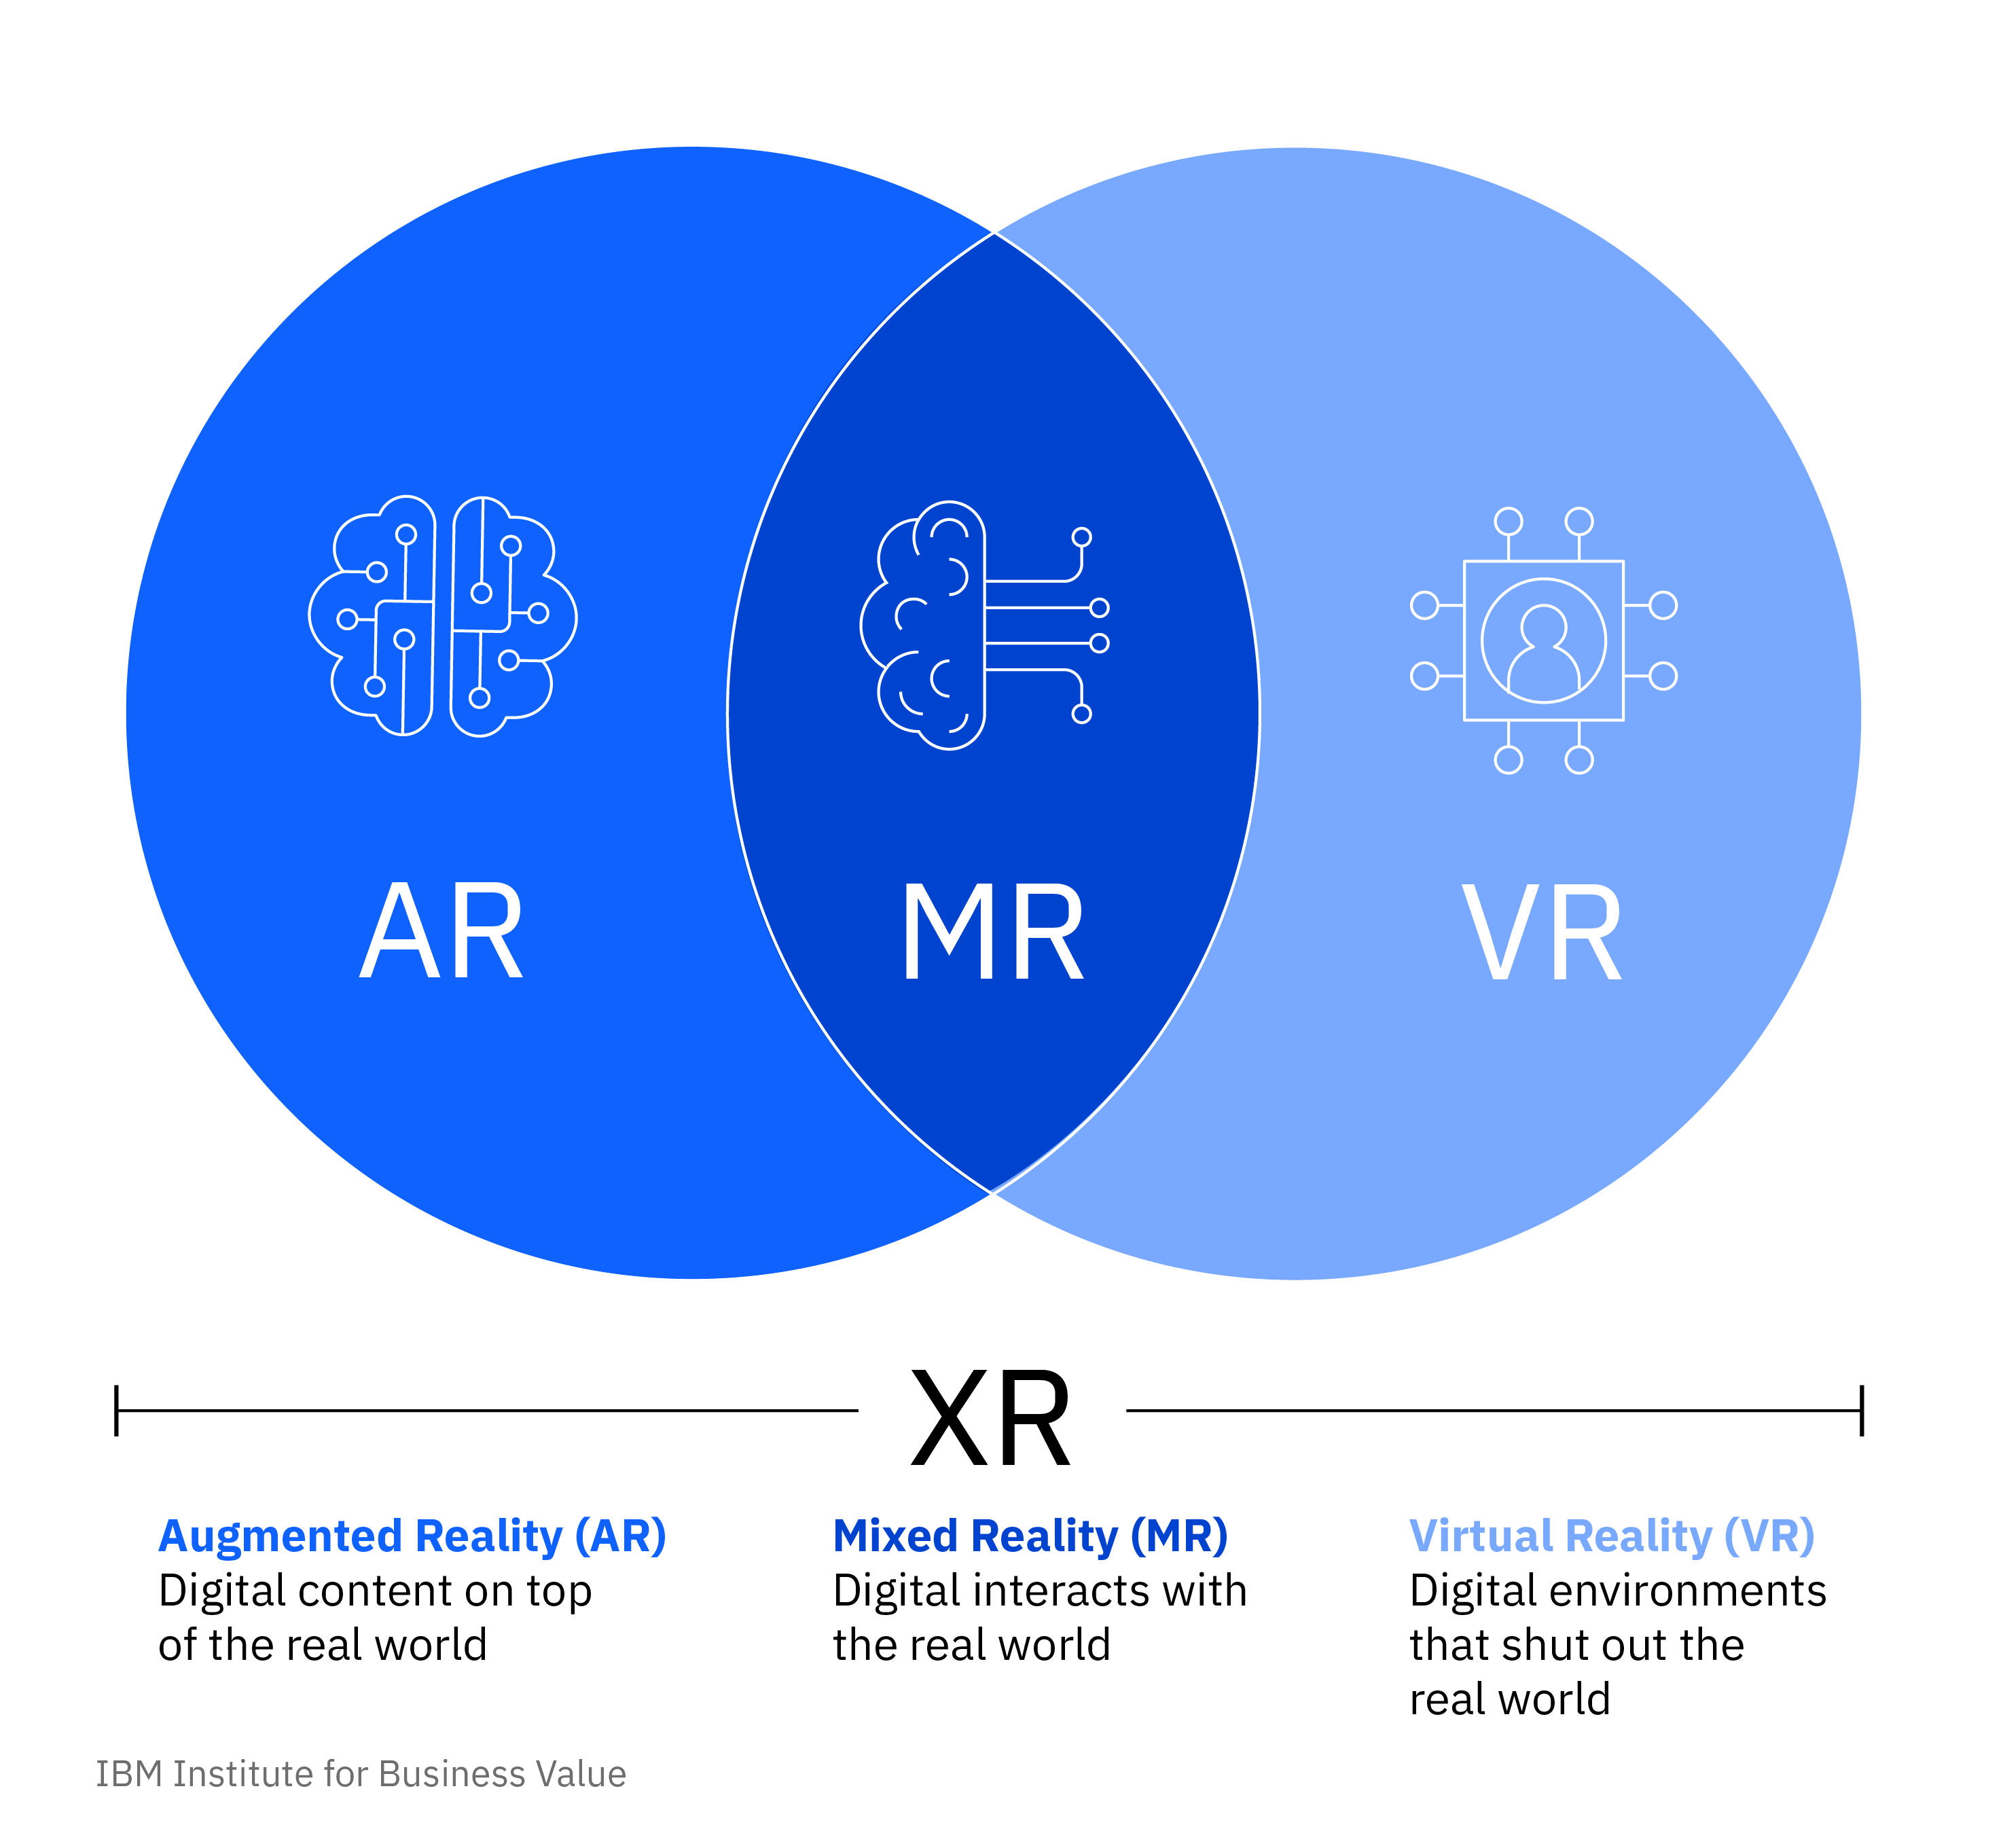 augmented, mixed and virtual reality